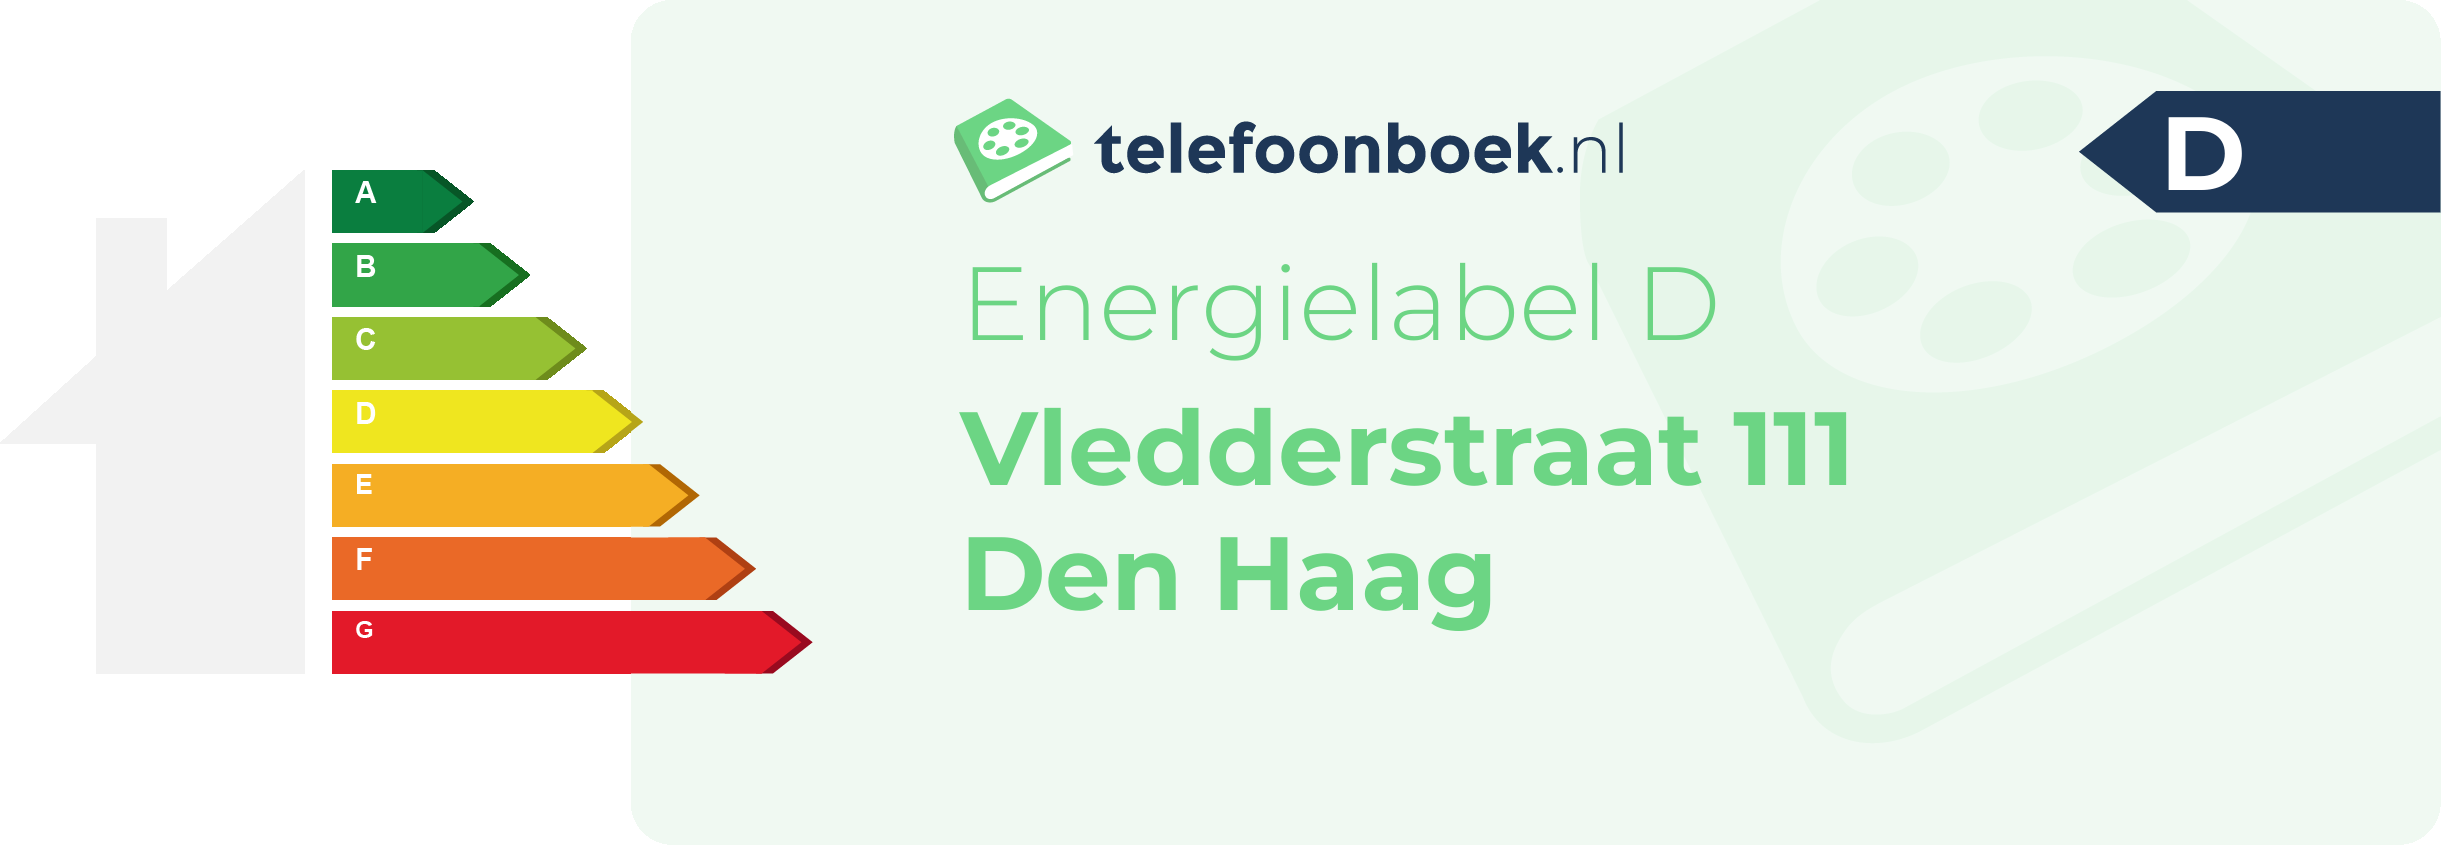 Energielabel Vledderstraat 111 Den Haag